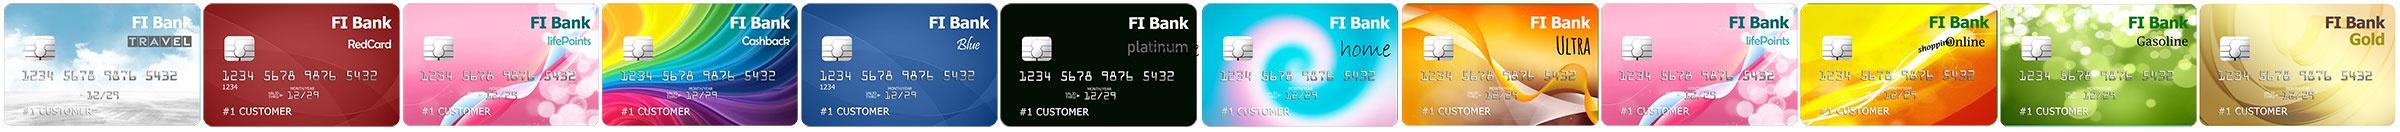 Credit Card Segmentation image